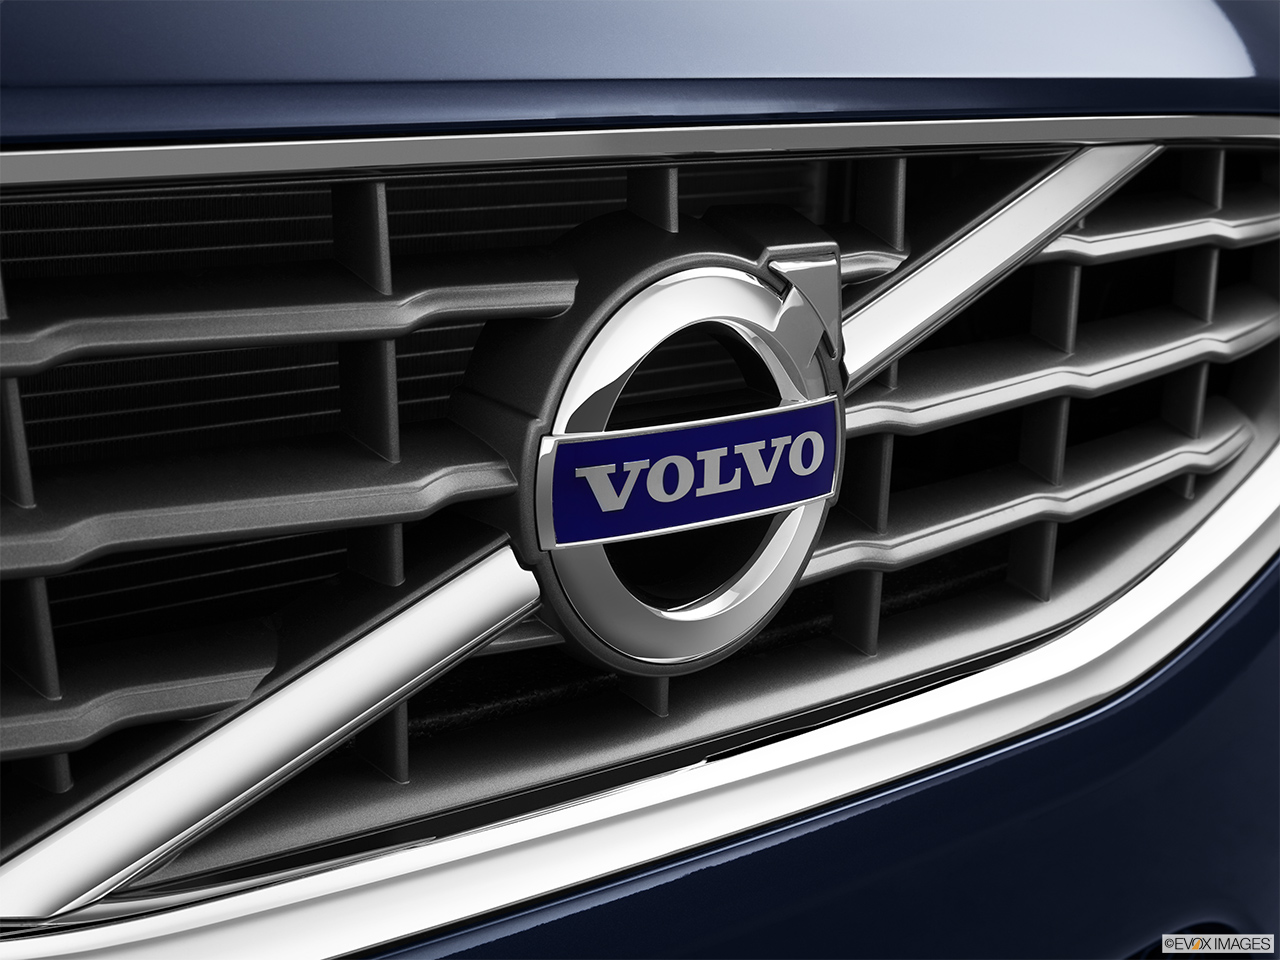 2013 Volvo S60 T5 FWD Premier Rear manufacture badge/emblem 